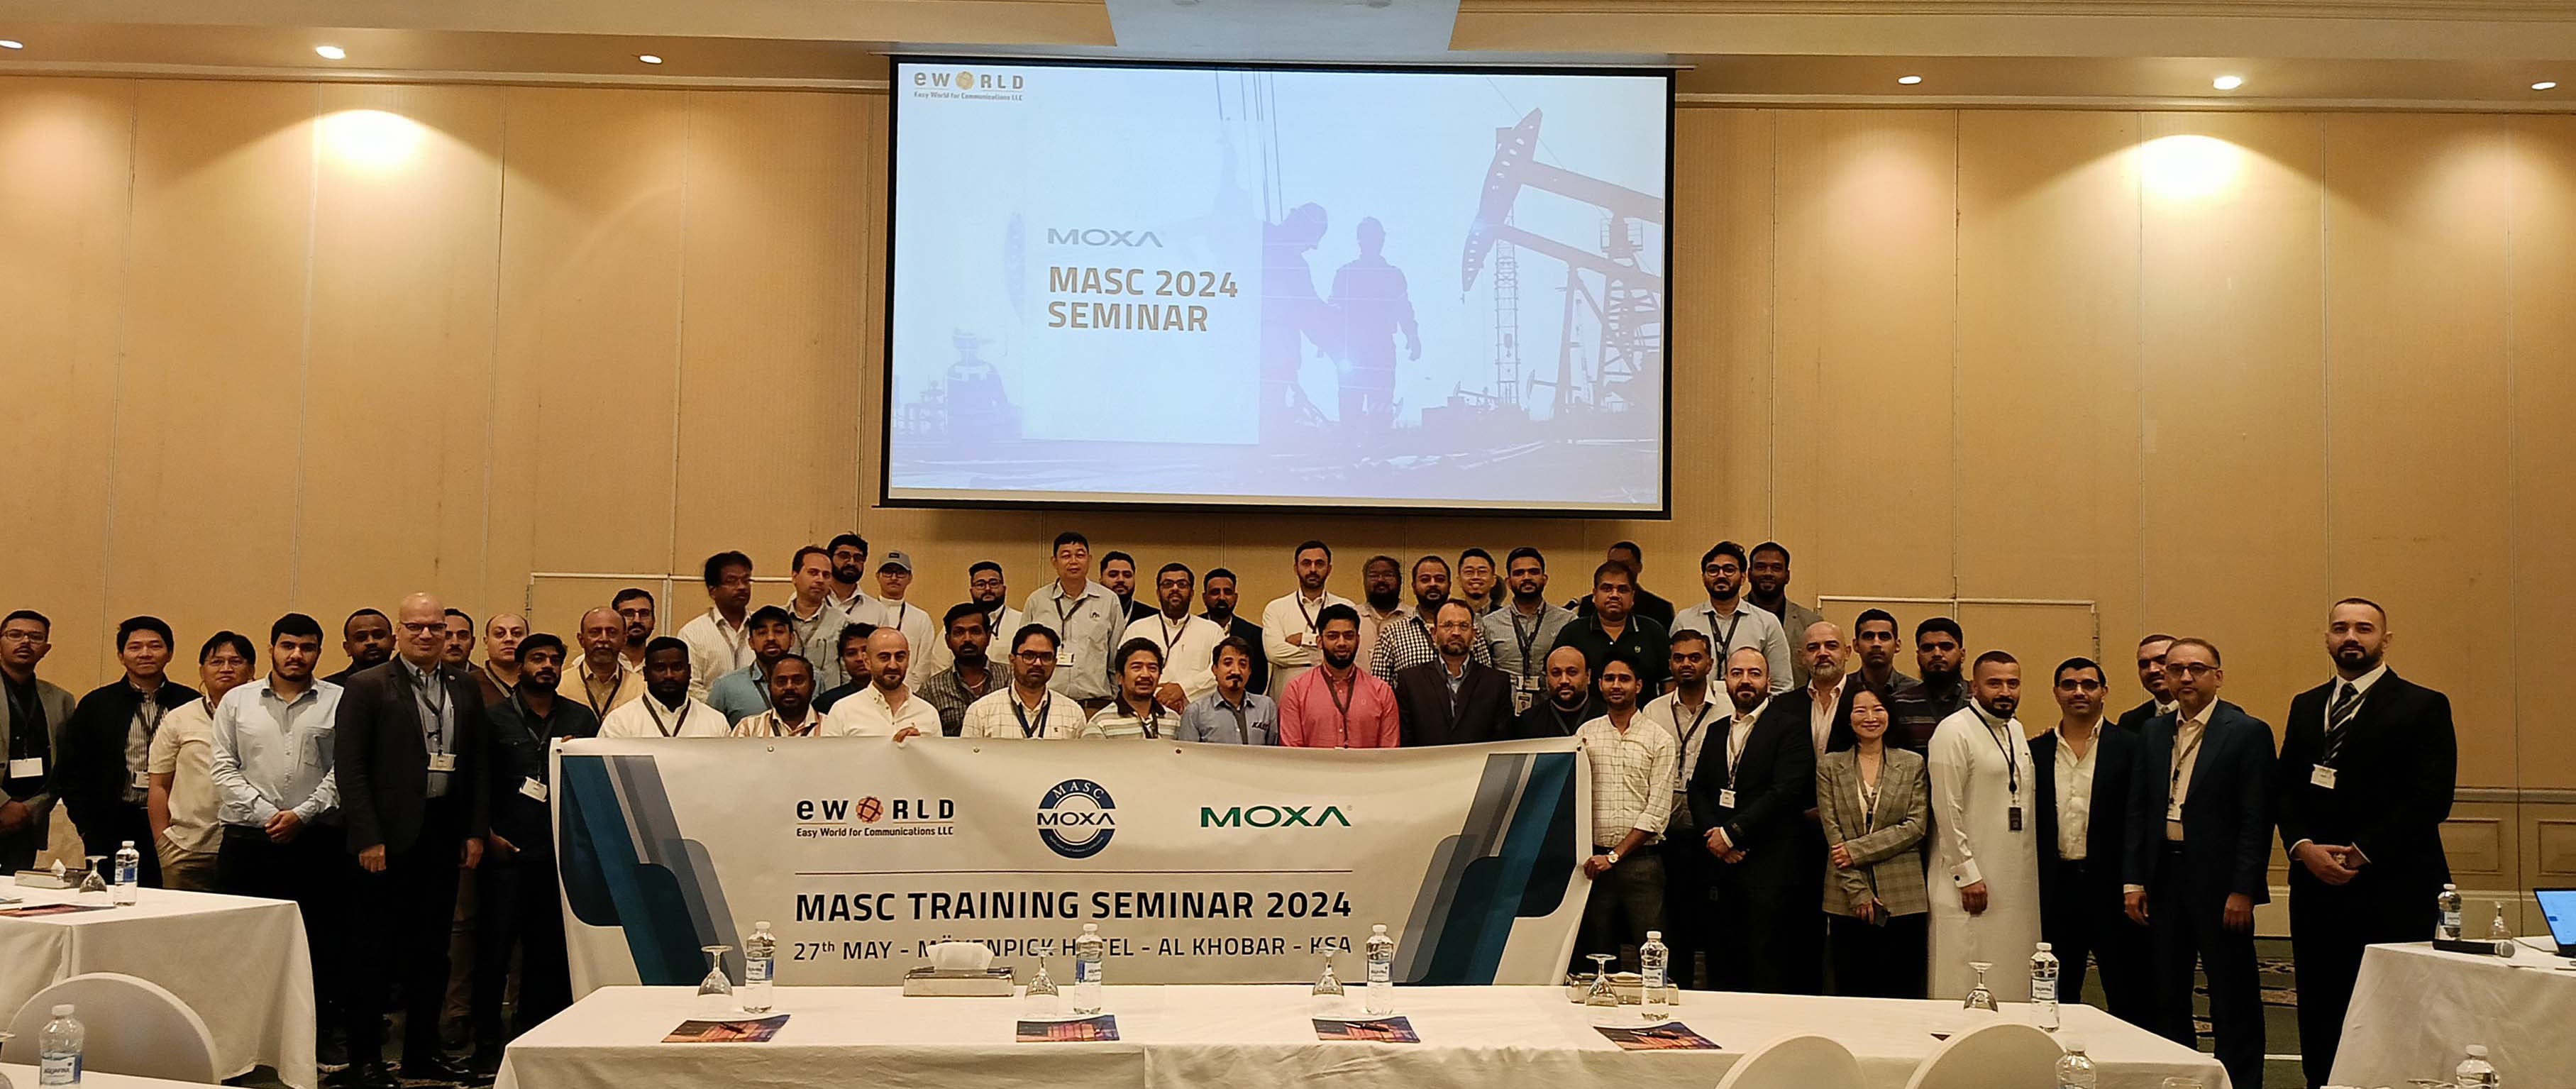 Al-Khobar-KSA-MASC-2024-Seminar-Photo-6-Easy-World-For-Communications-Blog